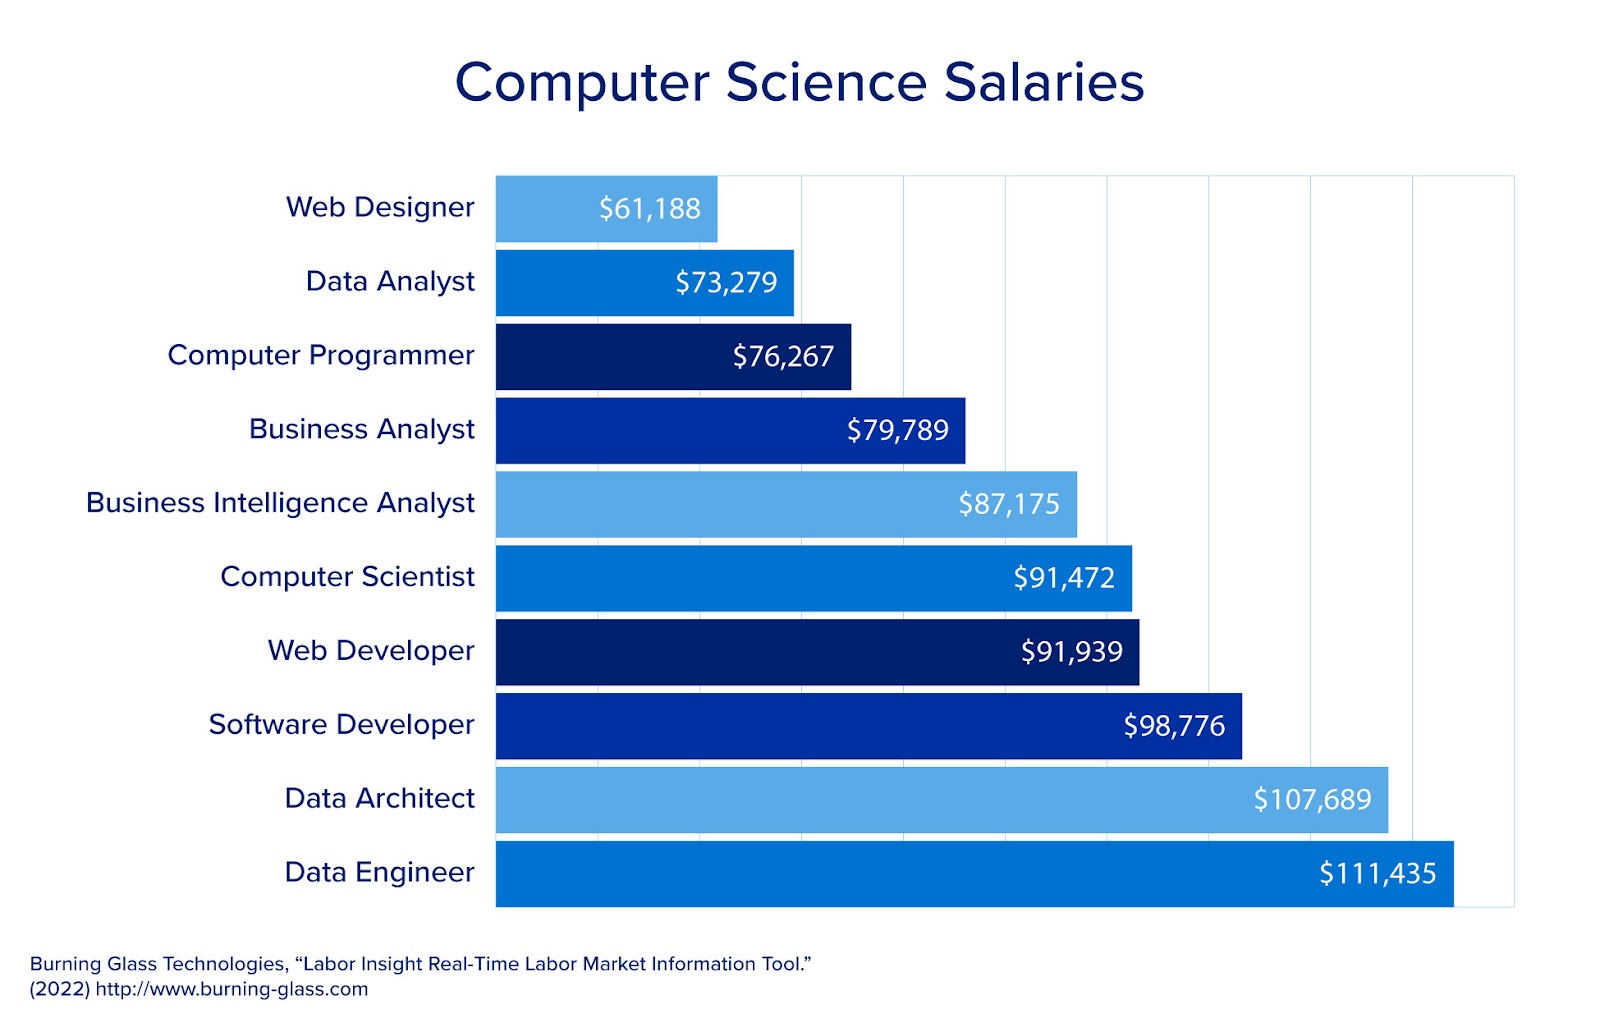 Top 10 Computer Science Careers in 2023 - Columbia Engineering Boot Camps